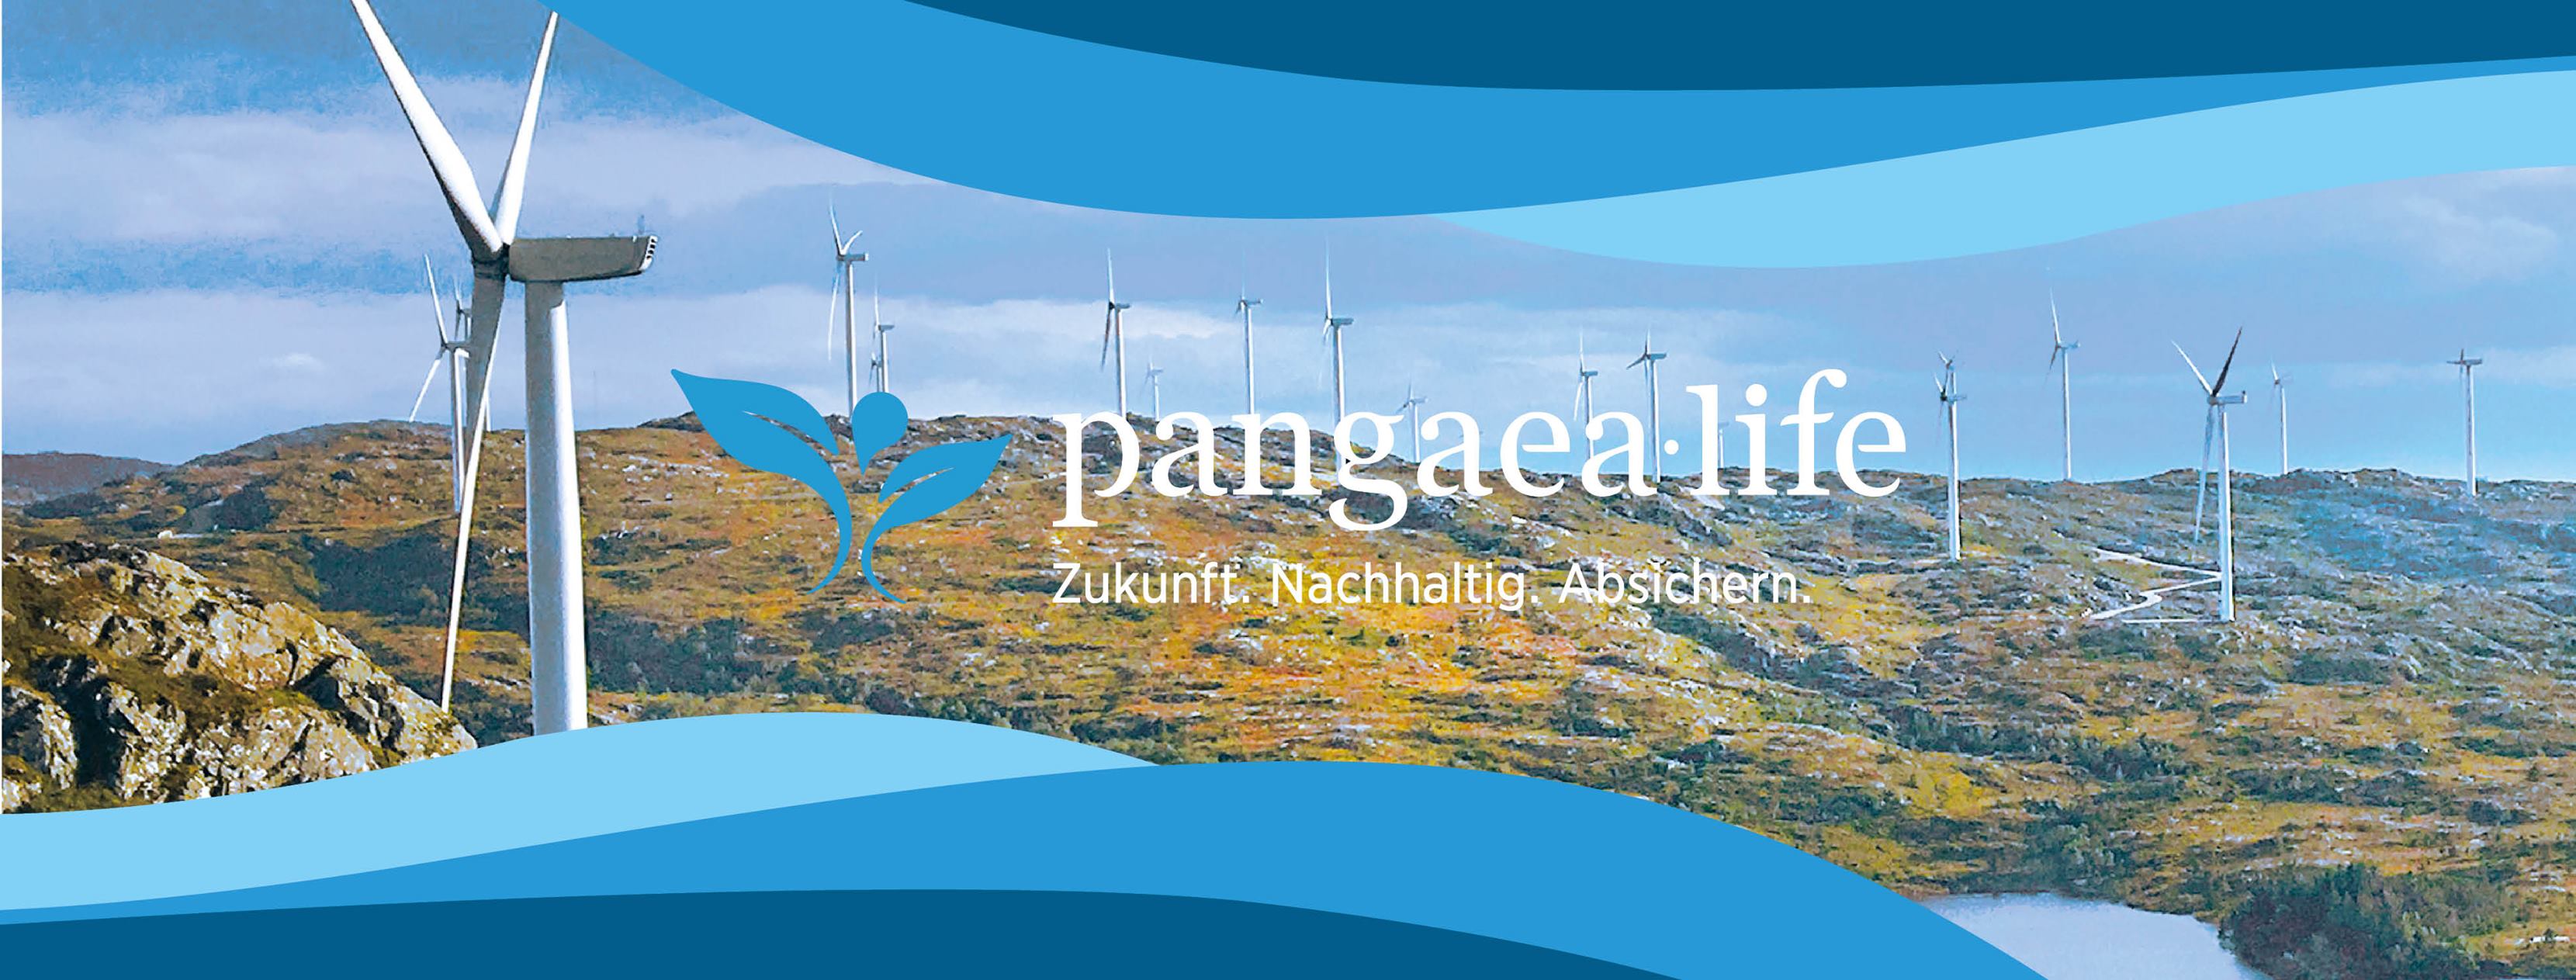 Pangaea Life 新能源基金